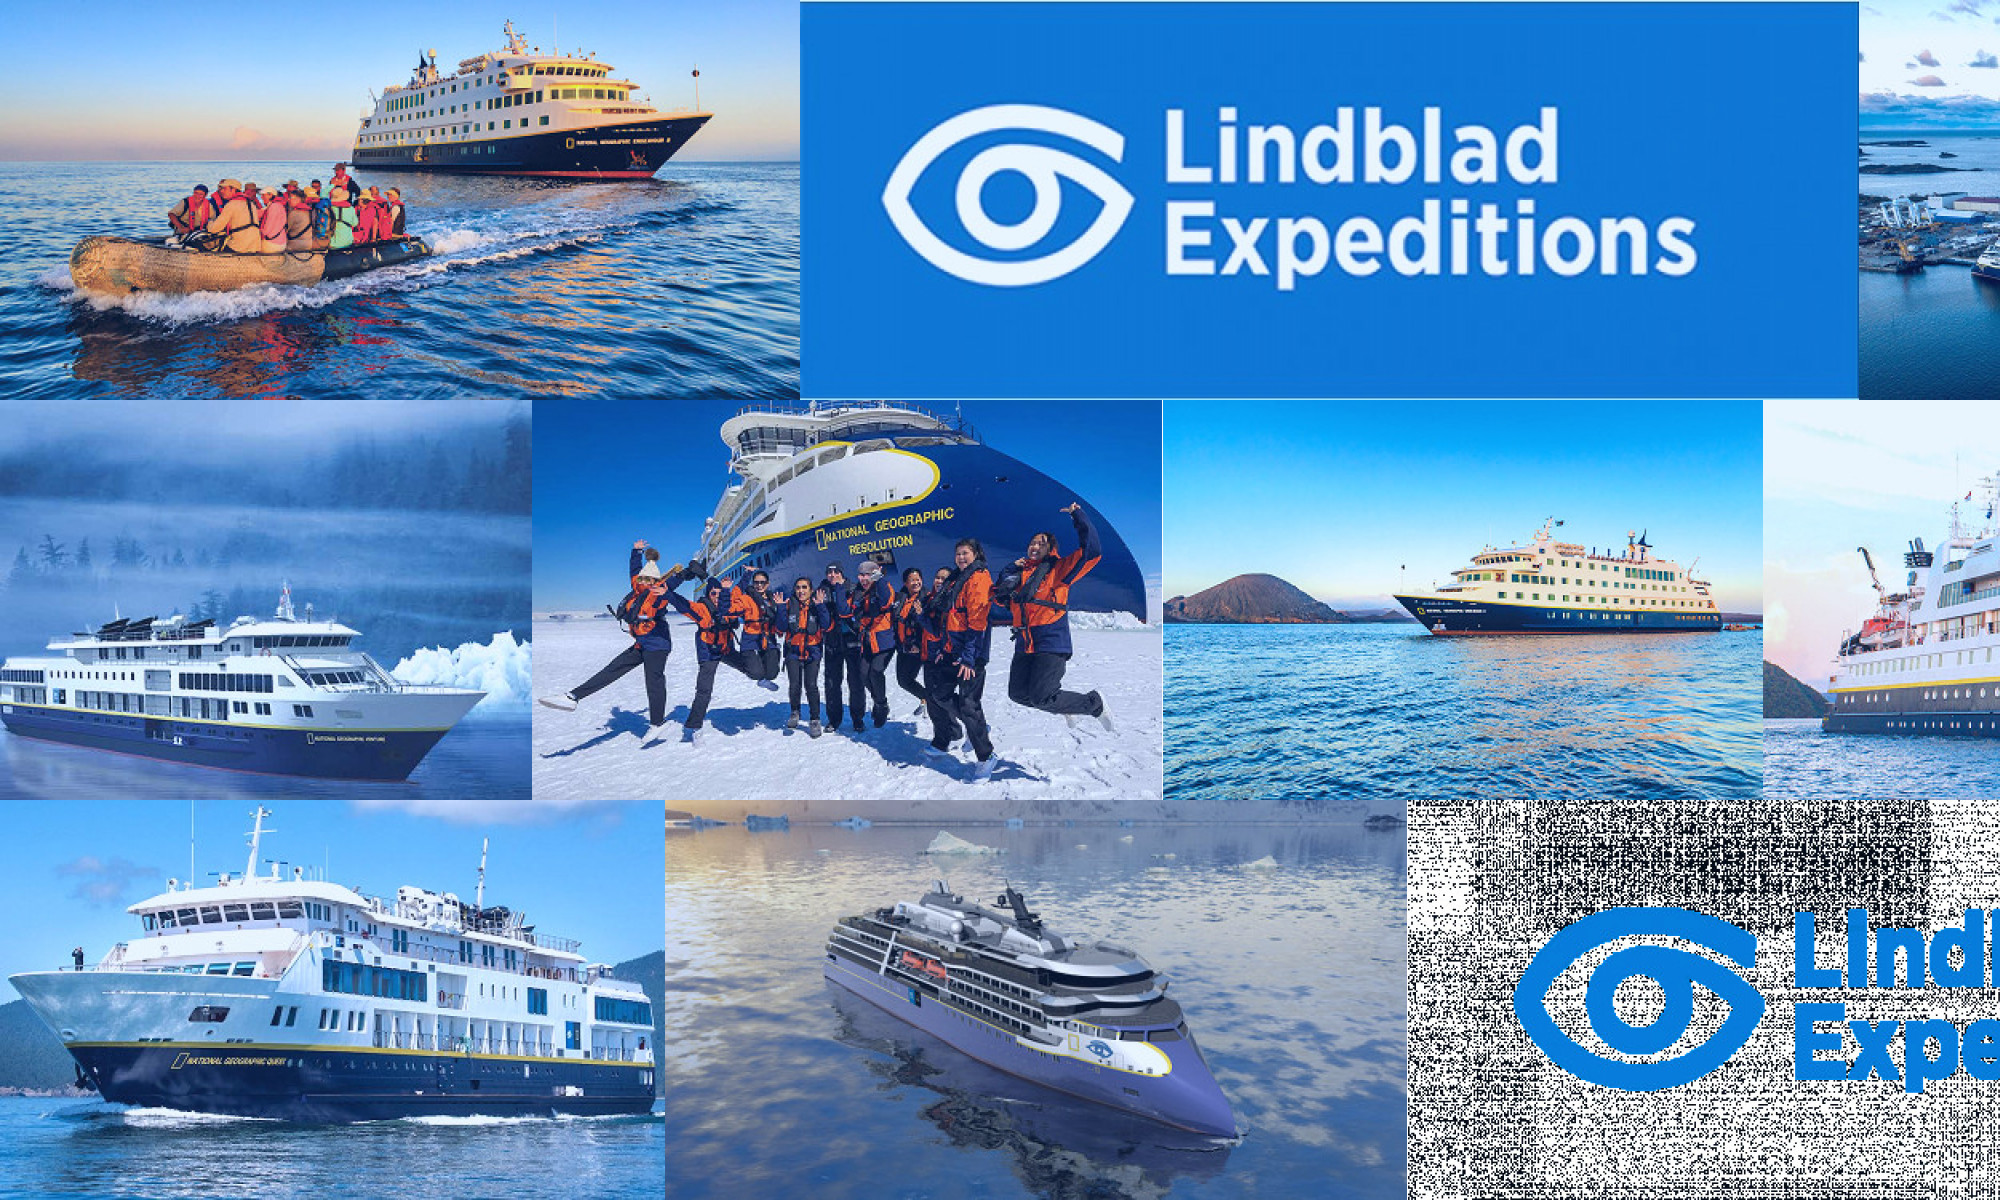 lindblad expeditions